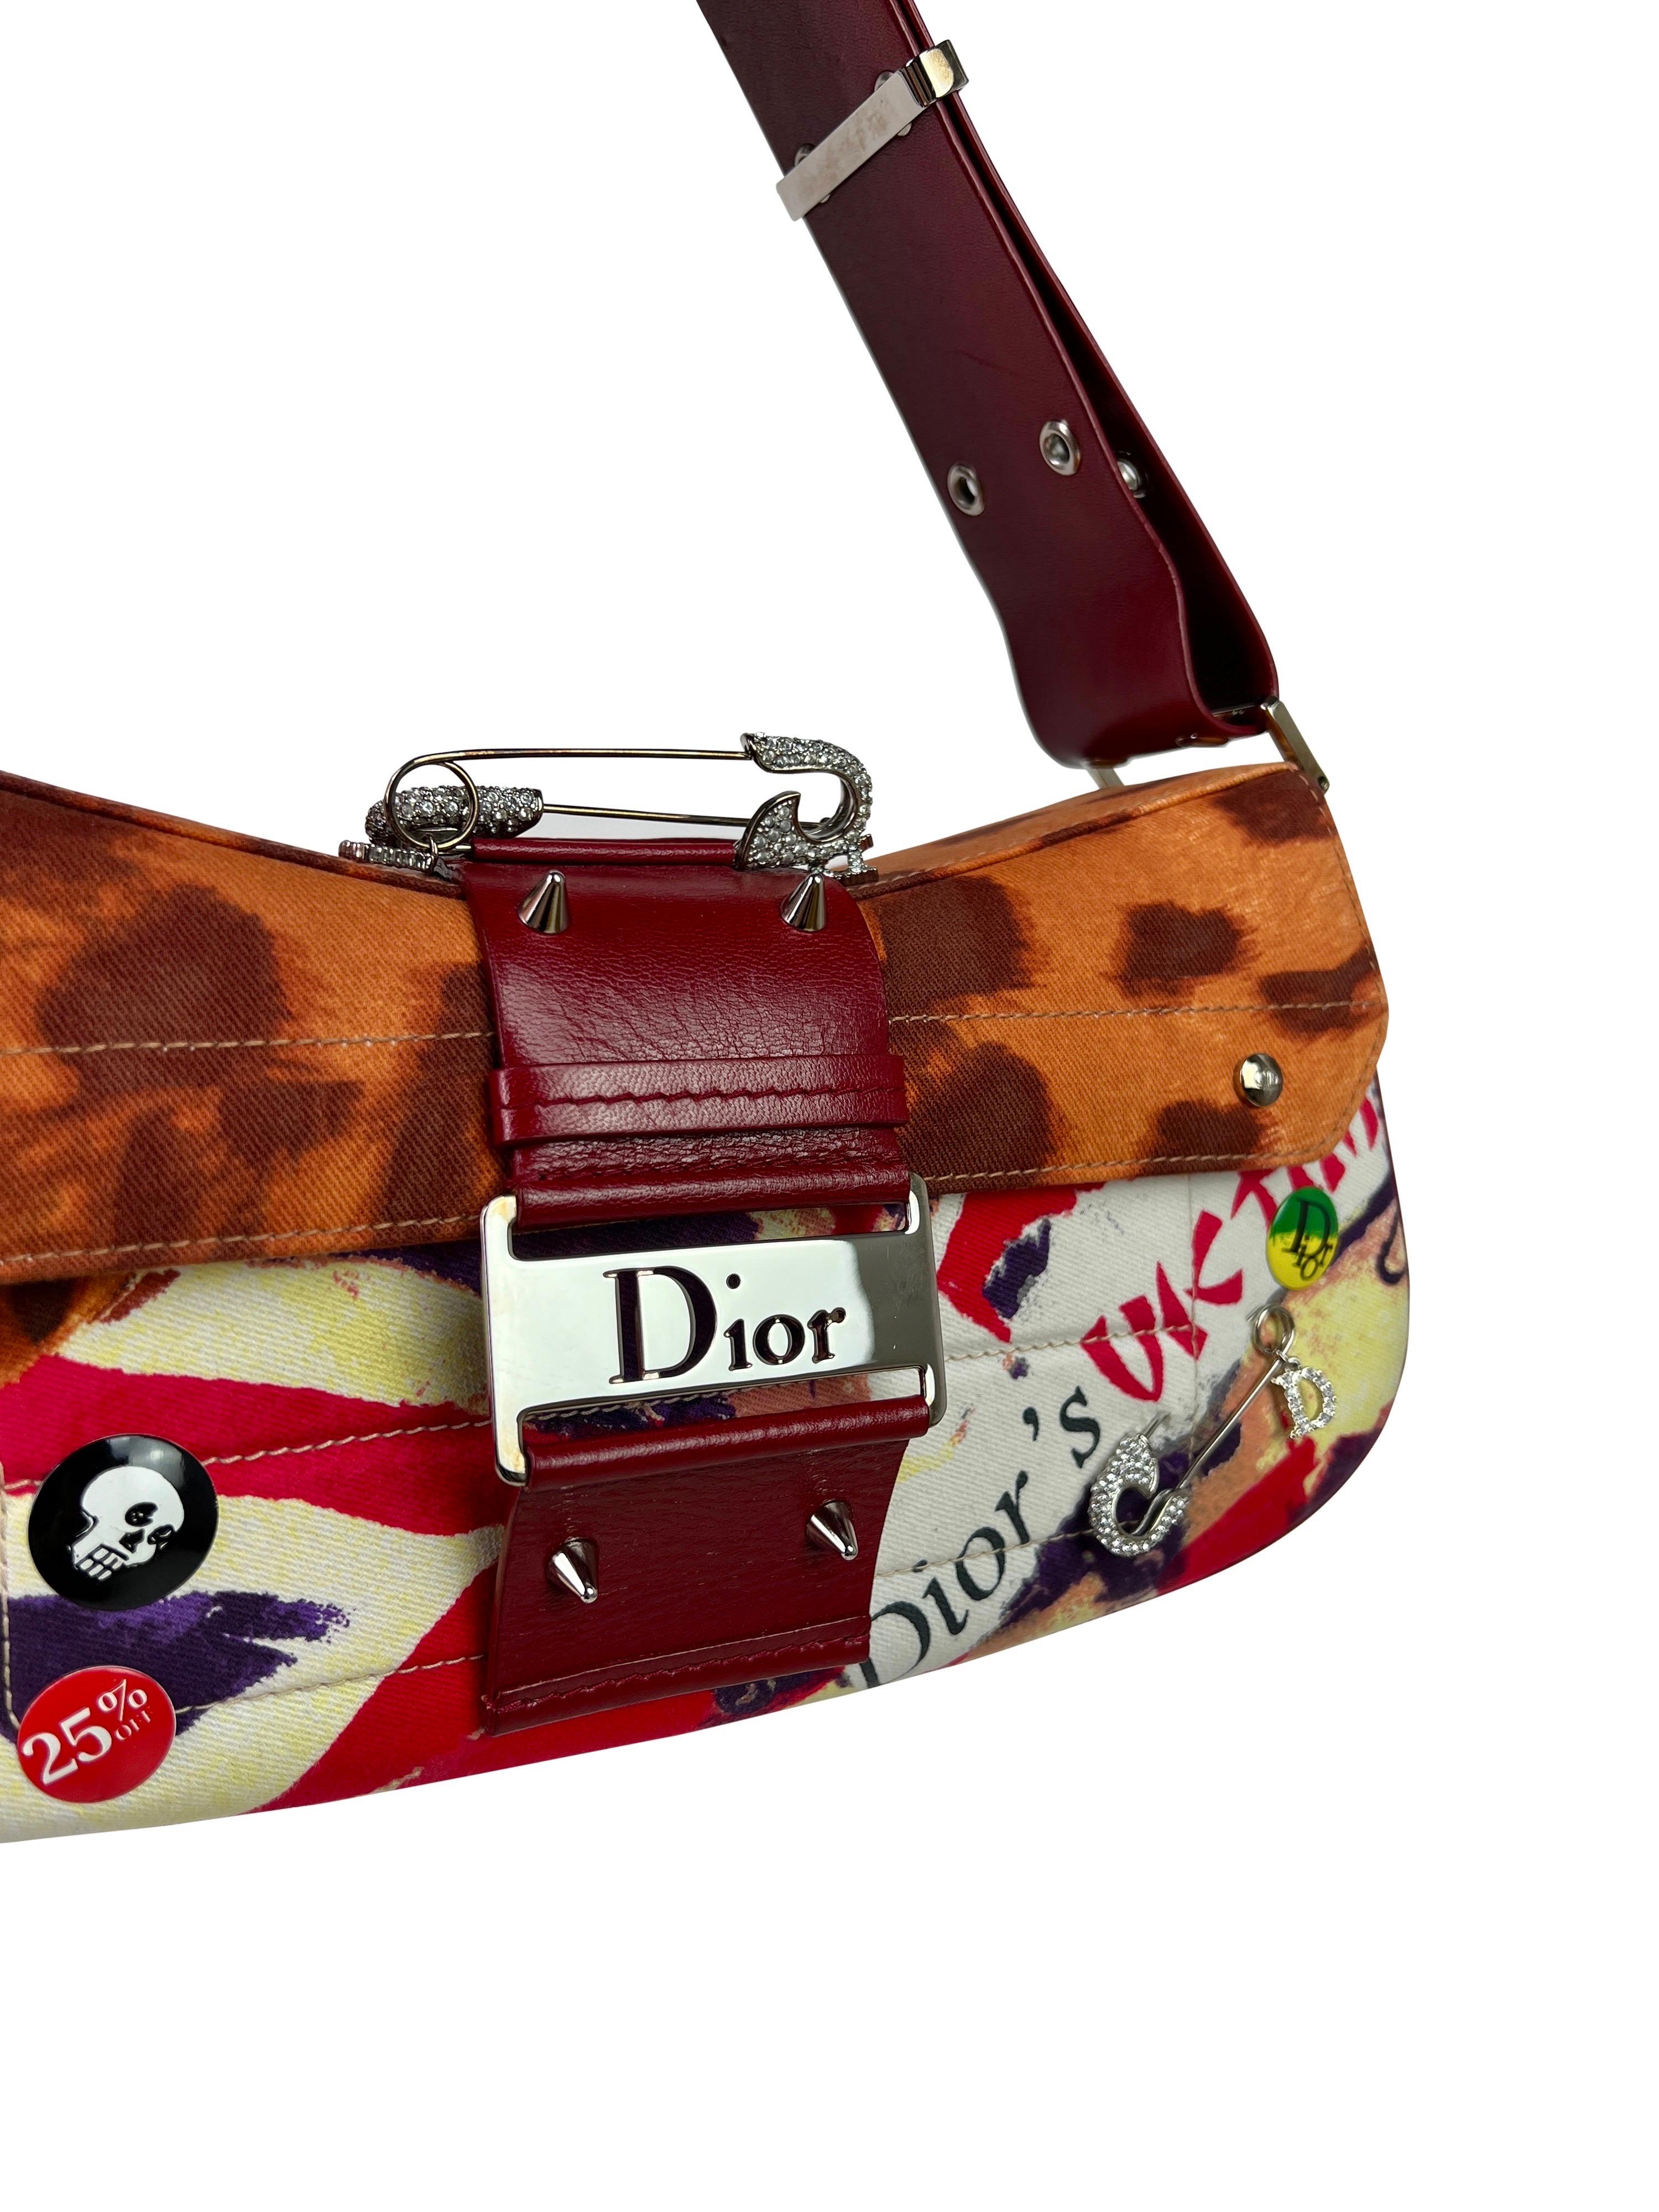 Dior Spring 2003 Limited Edition Columbus Street Chic Victim Handbag 8